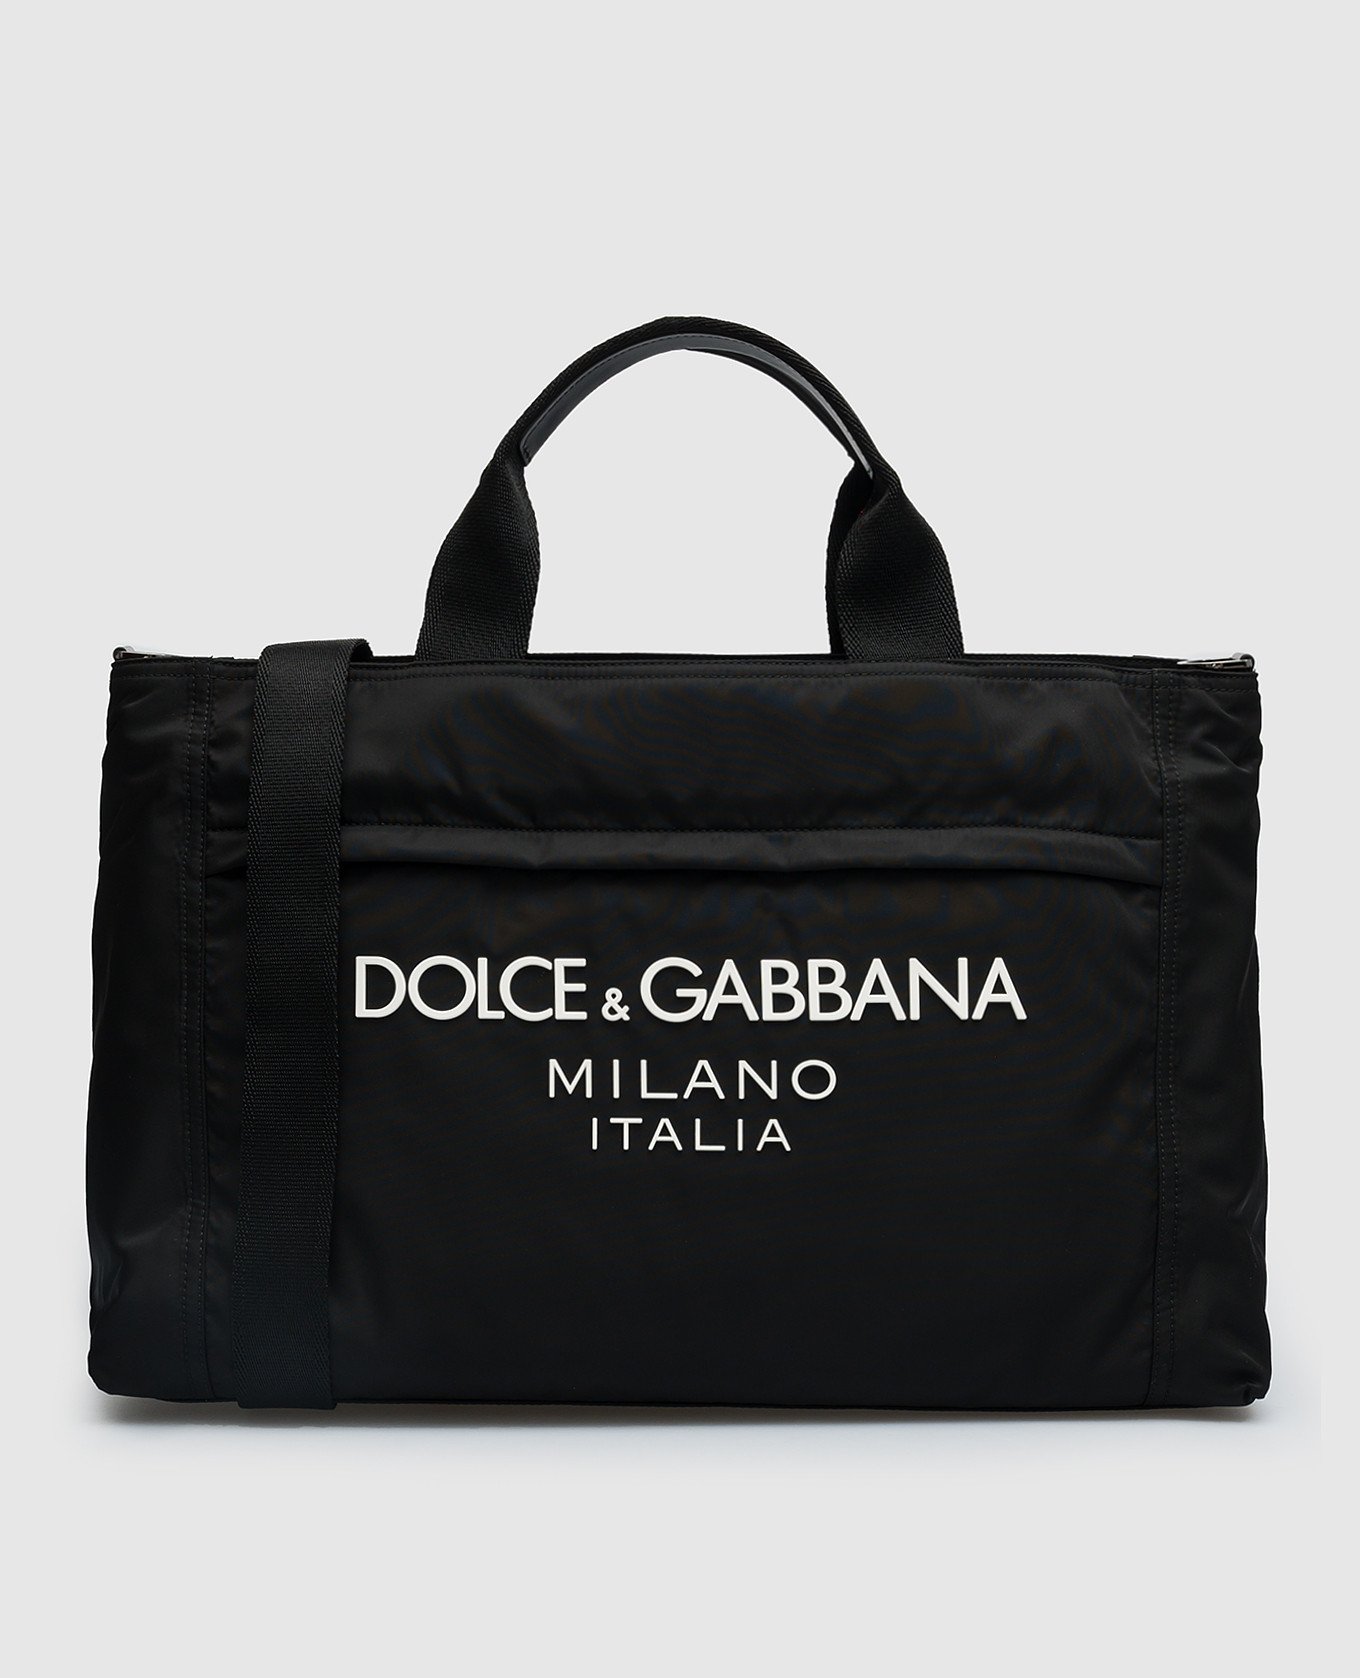 Black travel bag with contrasting logo